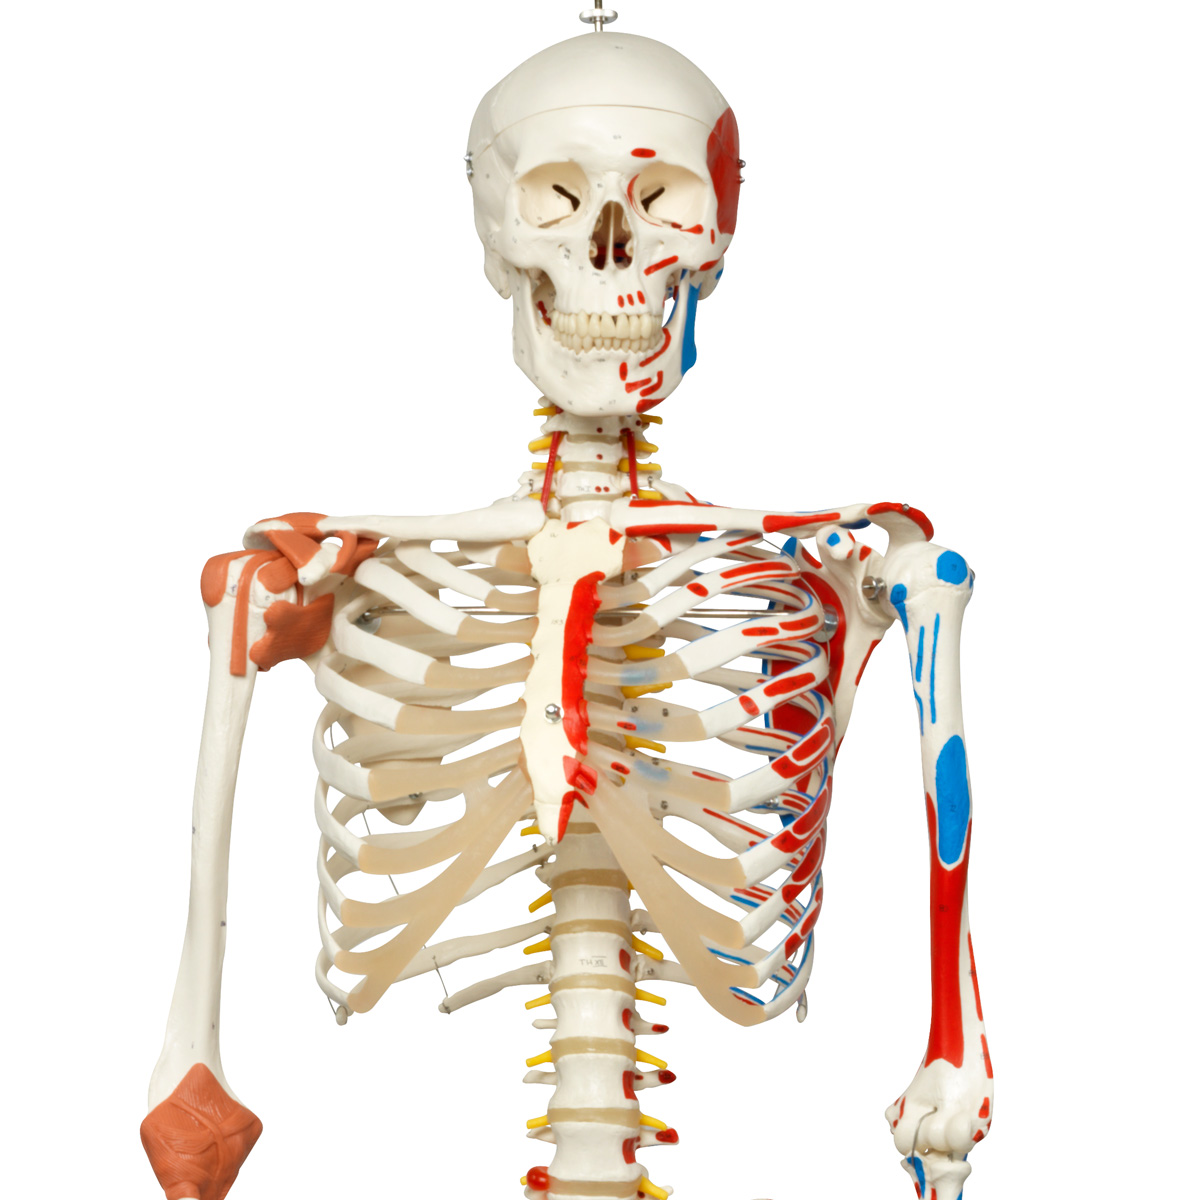 Imagens esqueleto humano anatomia